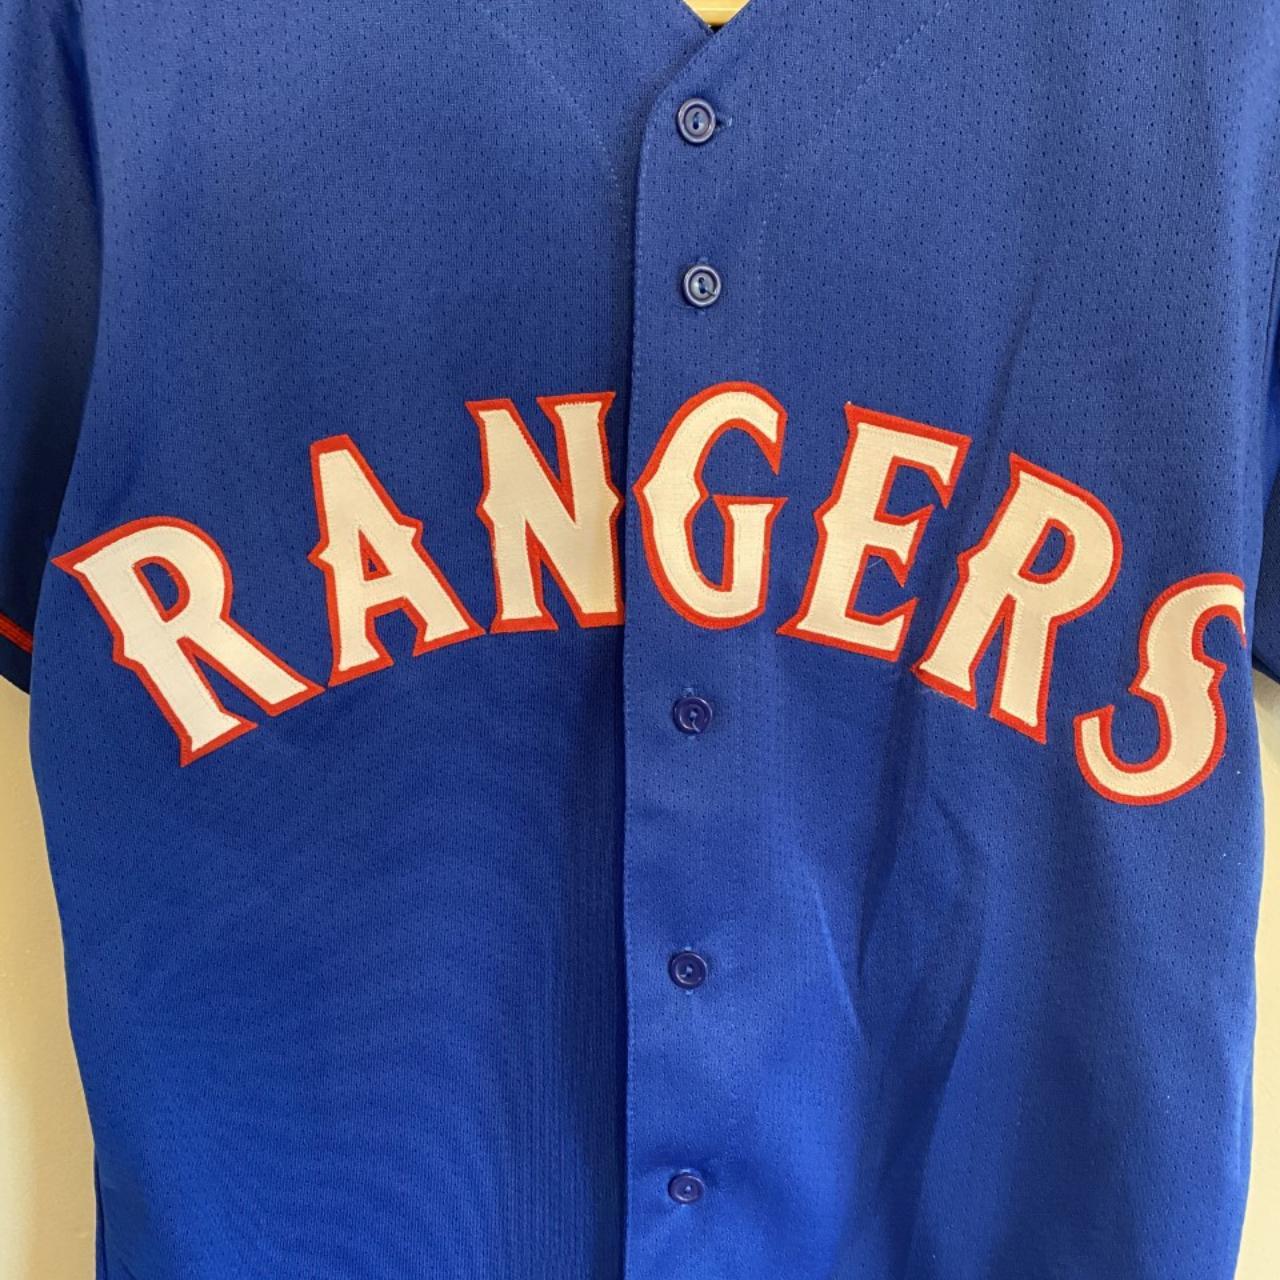 Majestic, Shirts, Texas Rangers Alfonso Soriano Jersey